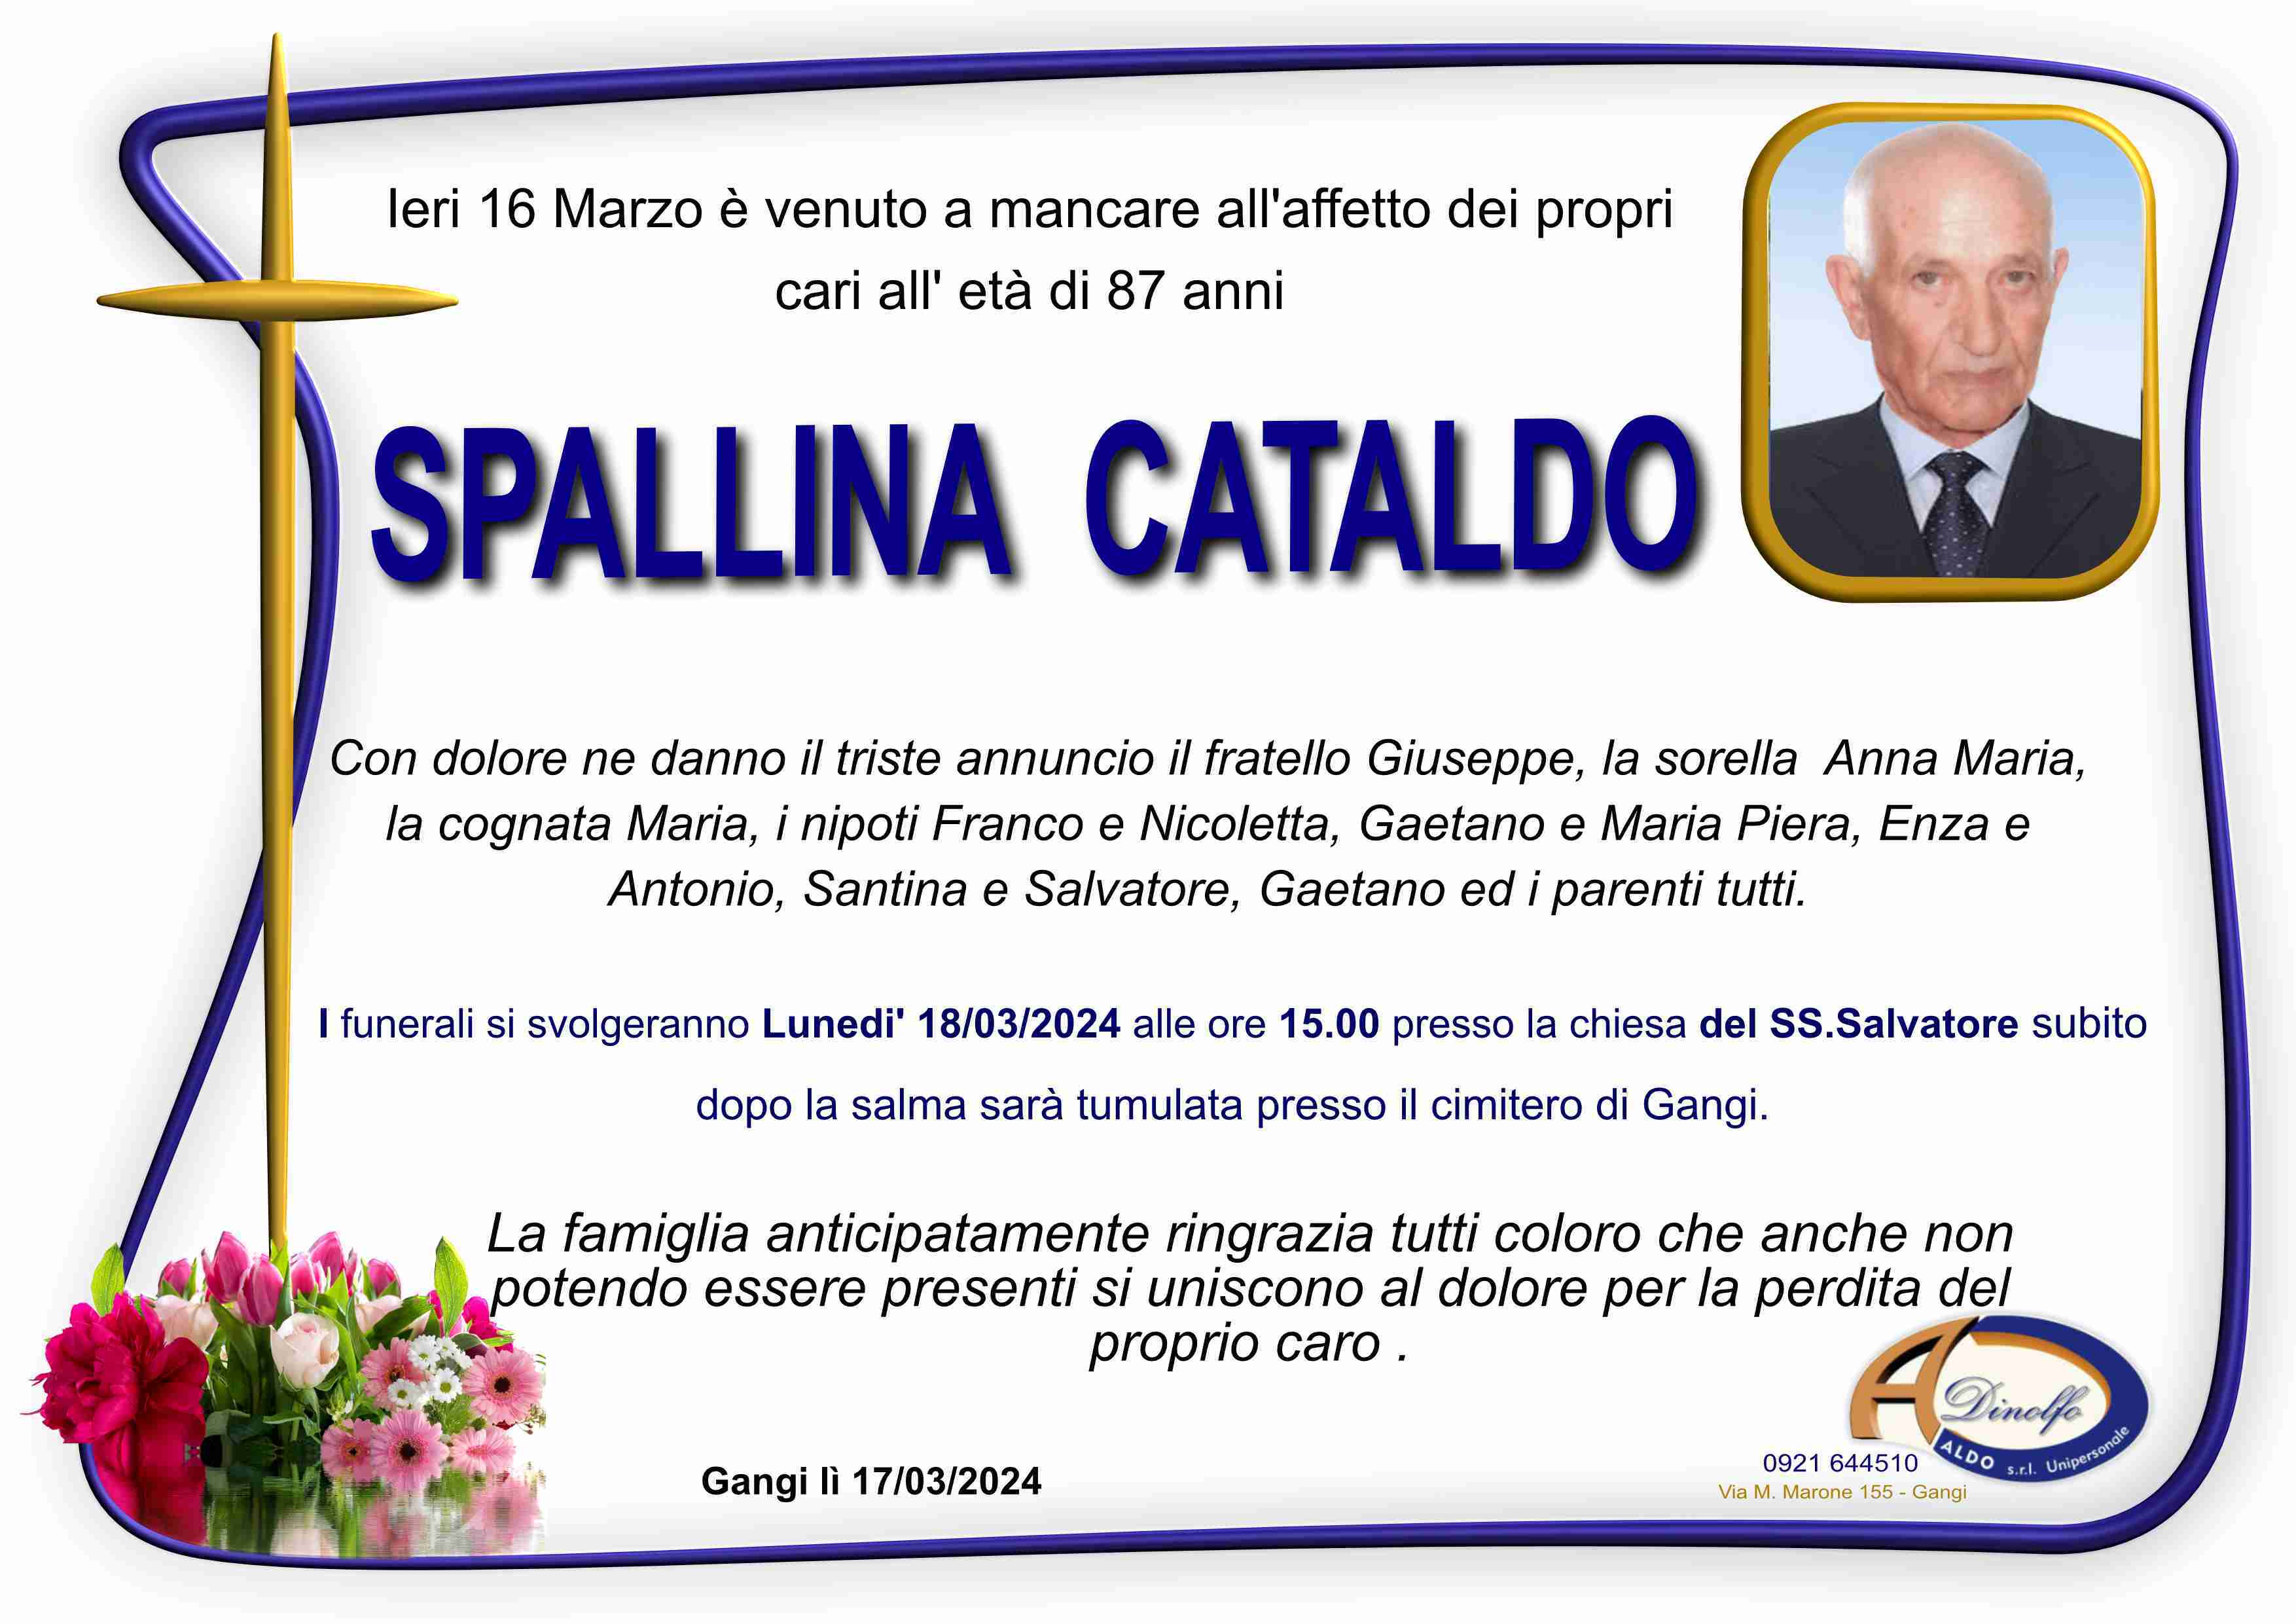 Cataldo Spallina